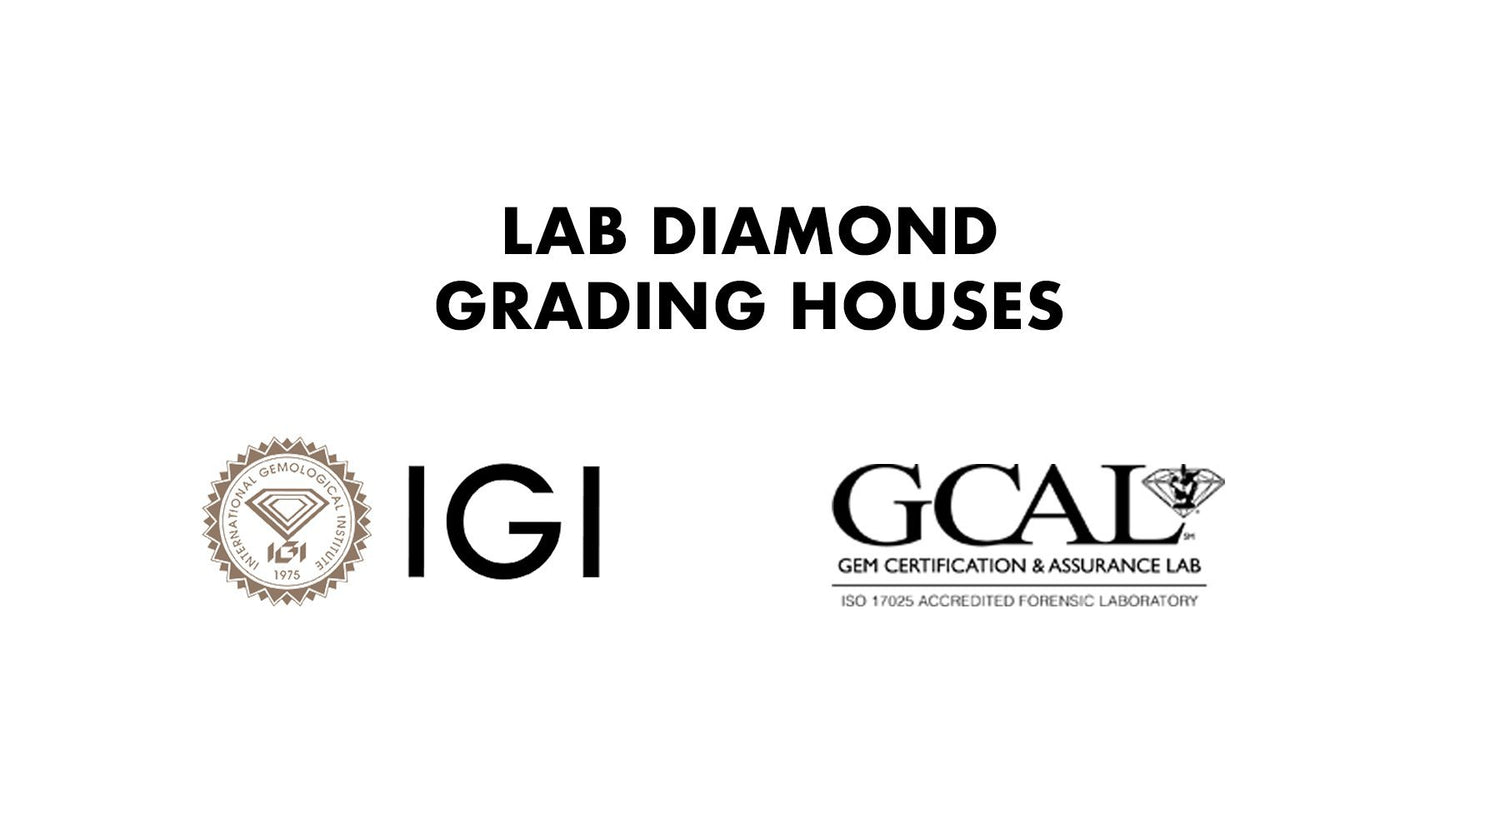 Do lab diamonds have certificates like natural diamonds?